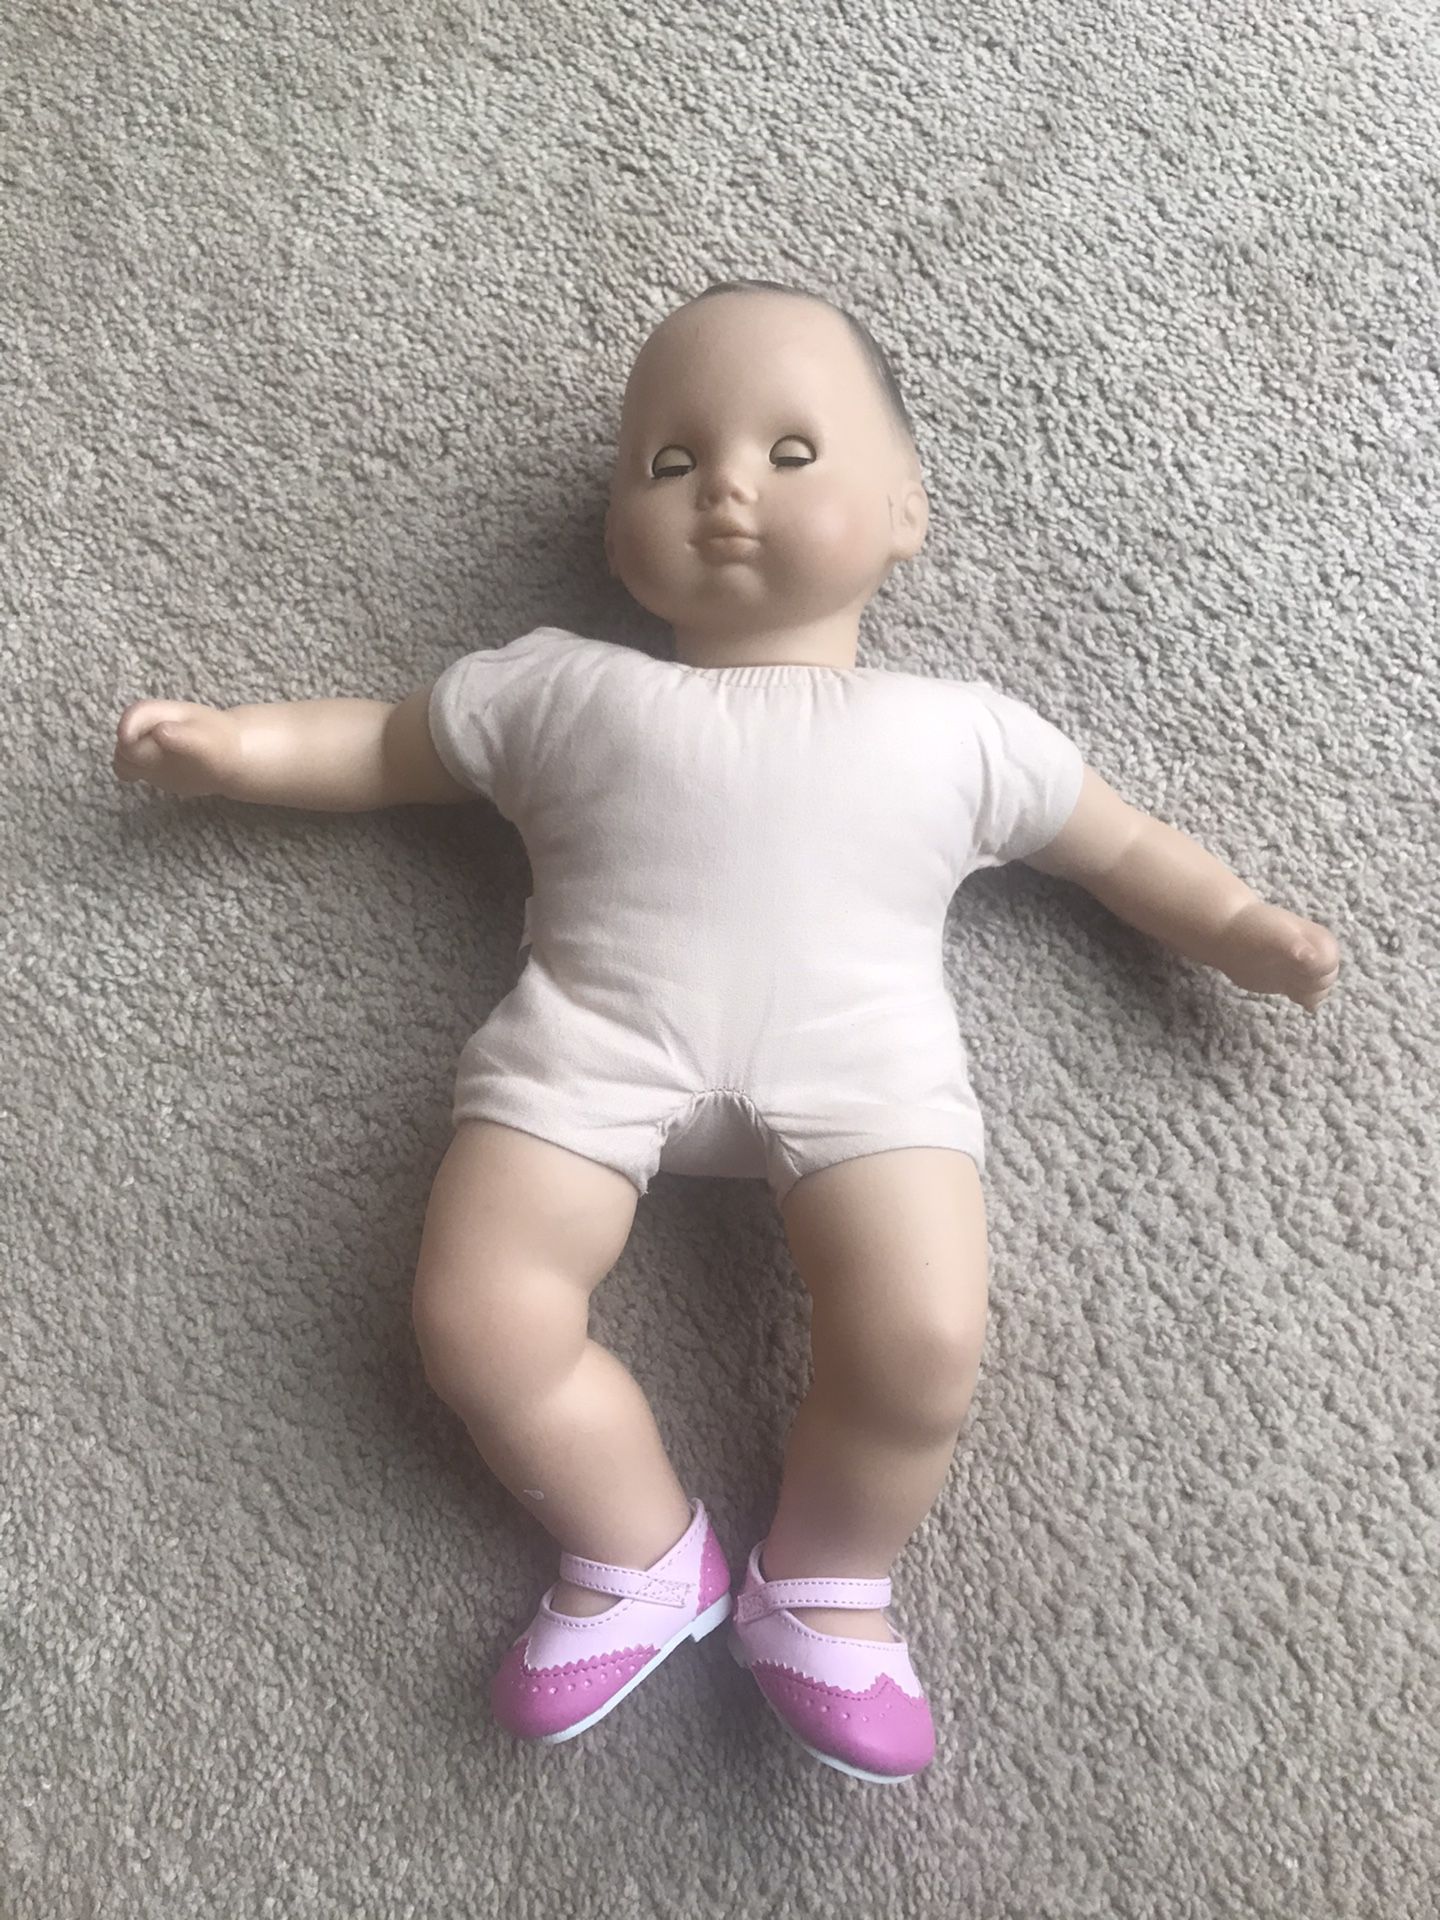 Bitty Baby from American girl dolls.